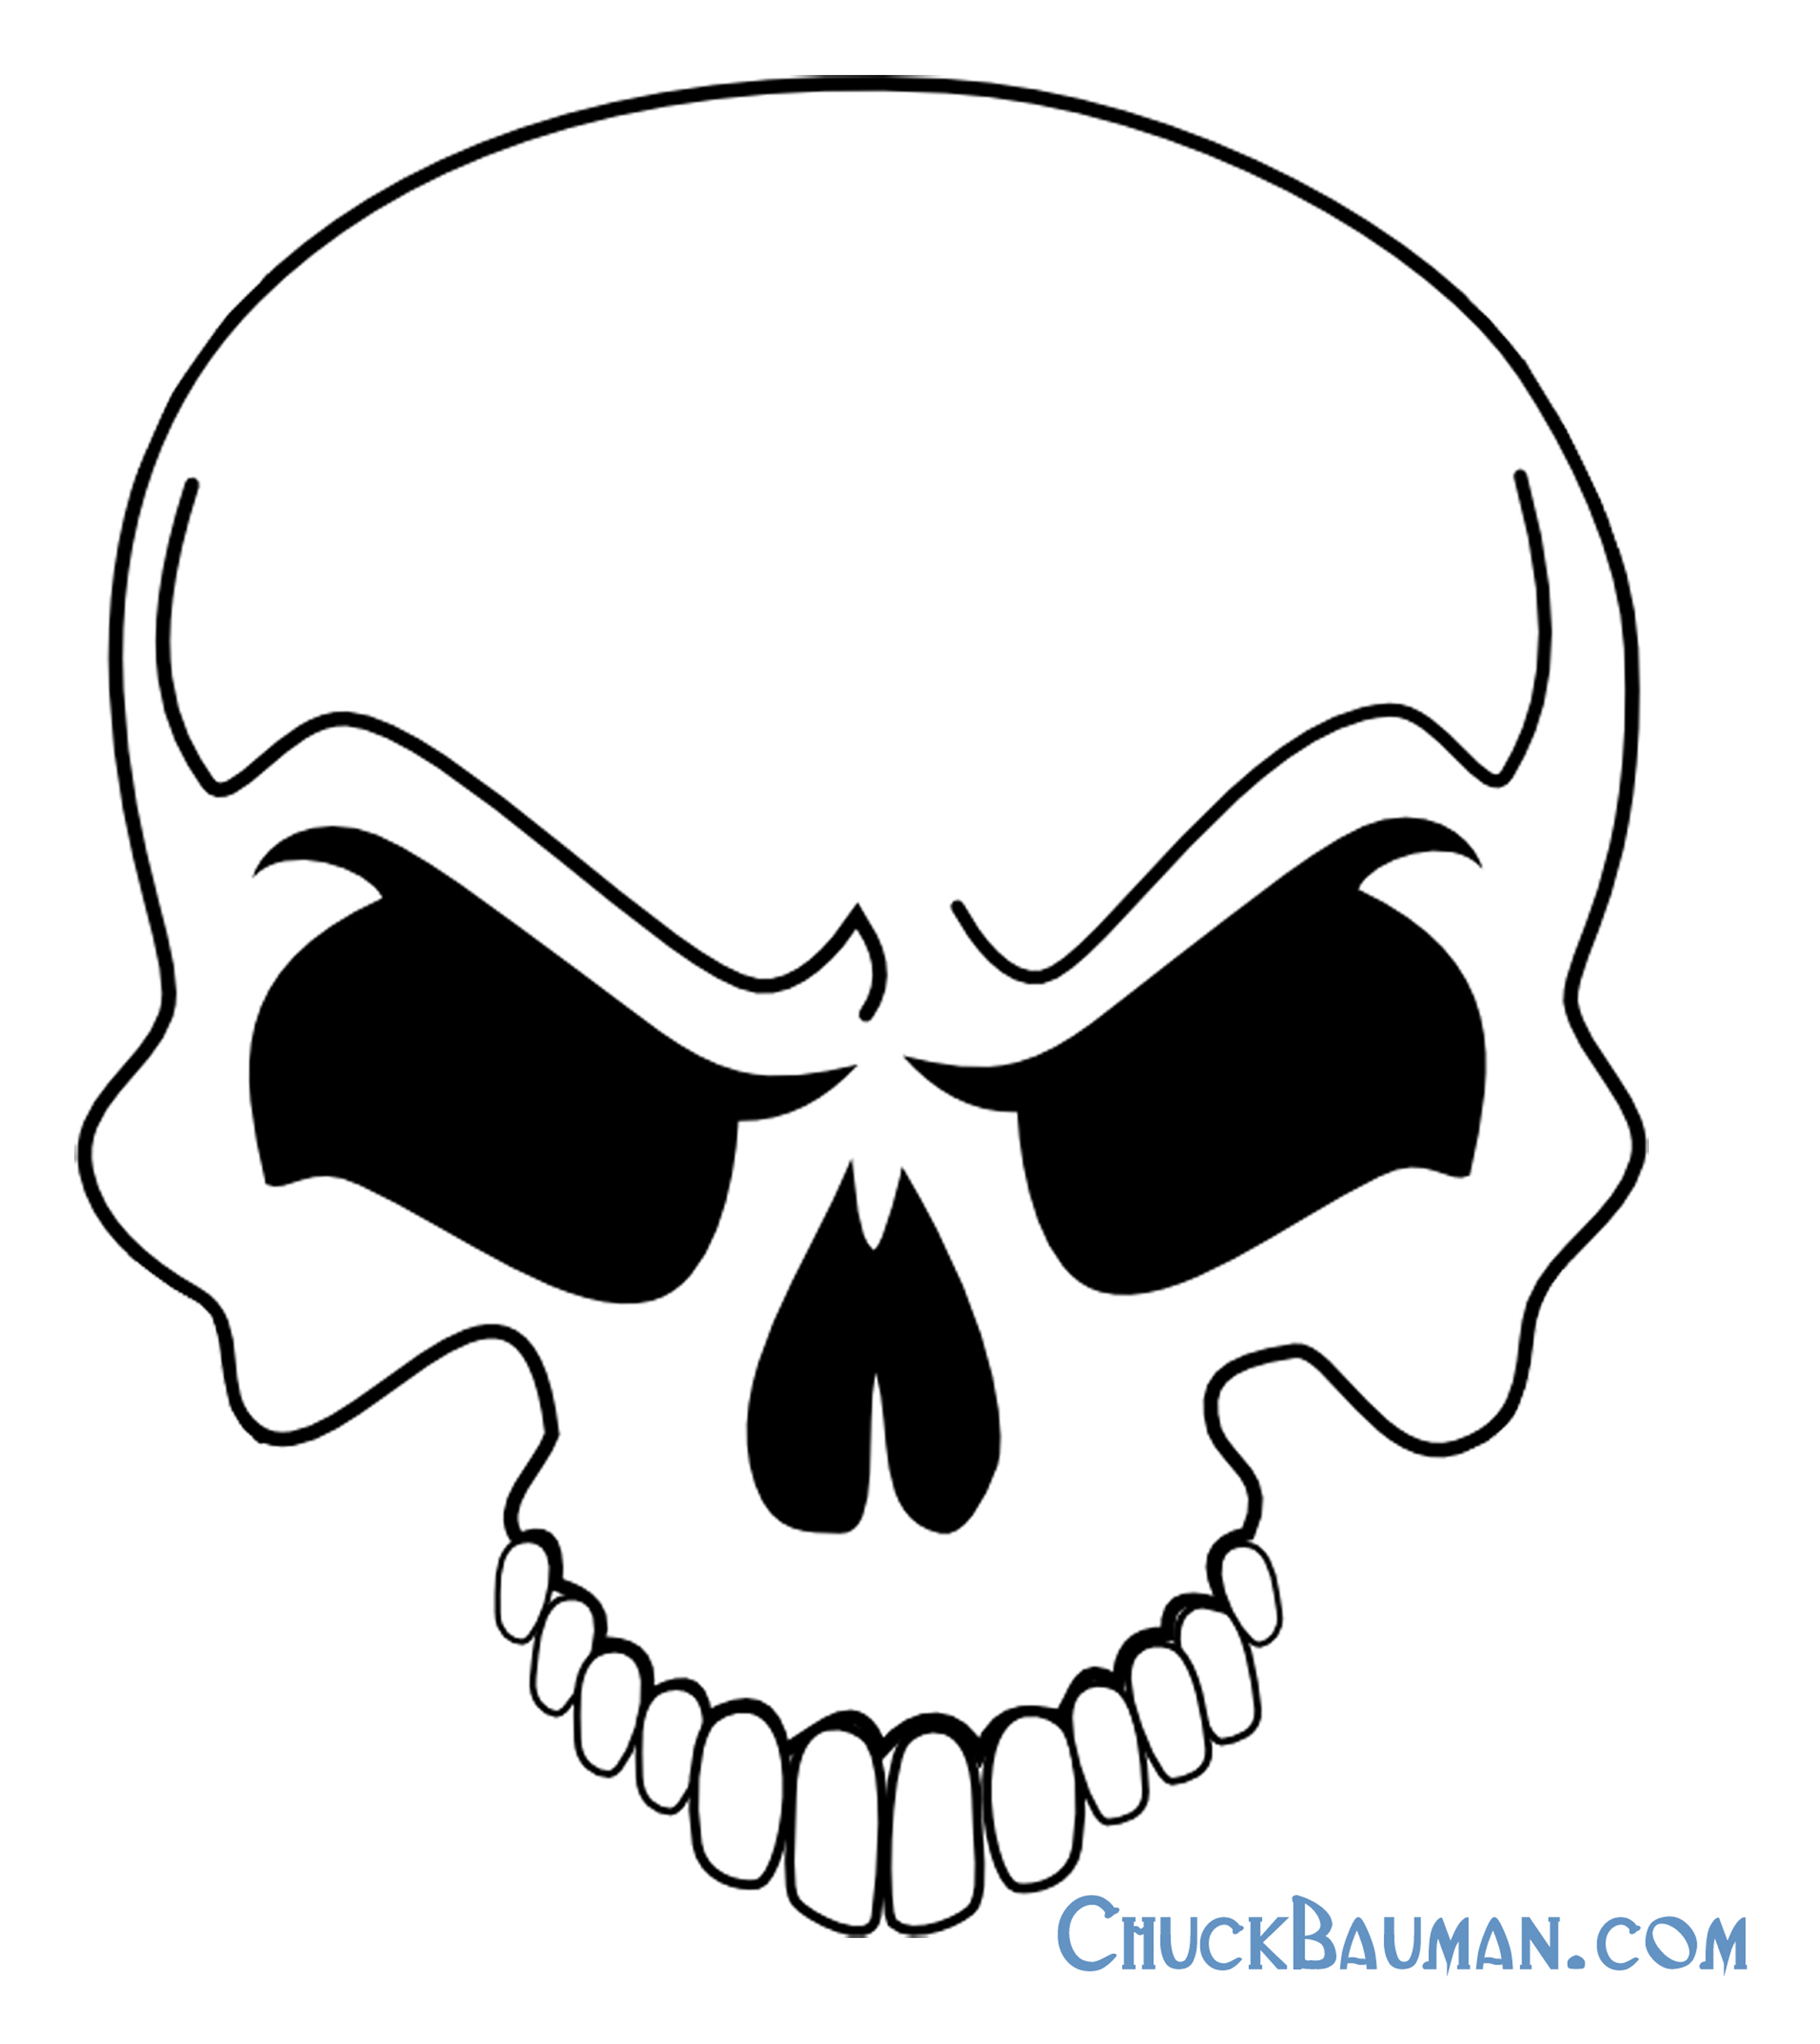 Skulls - FREE Skull Airbrushing Stencils - FREE airbrushing tools resources